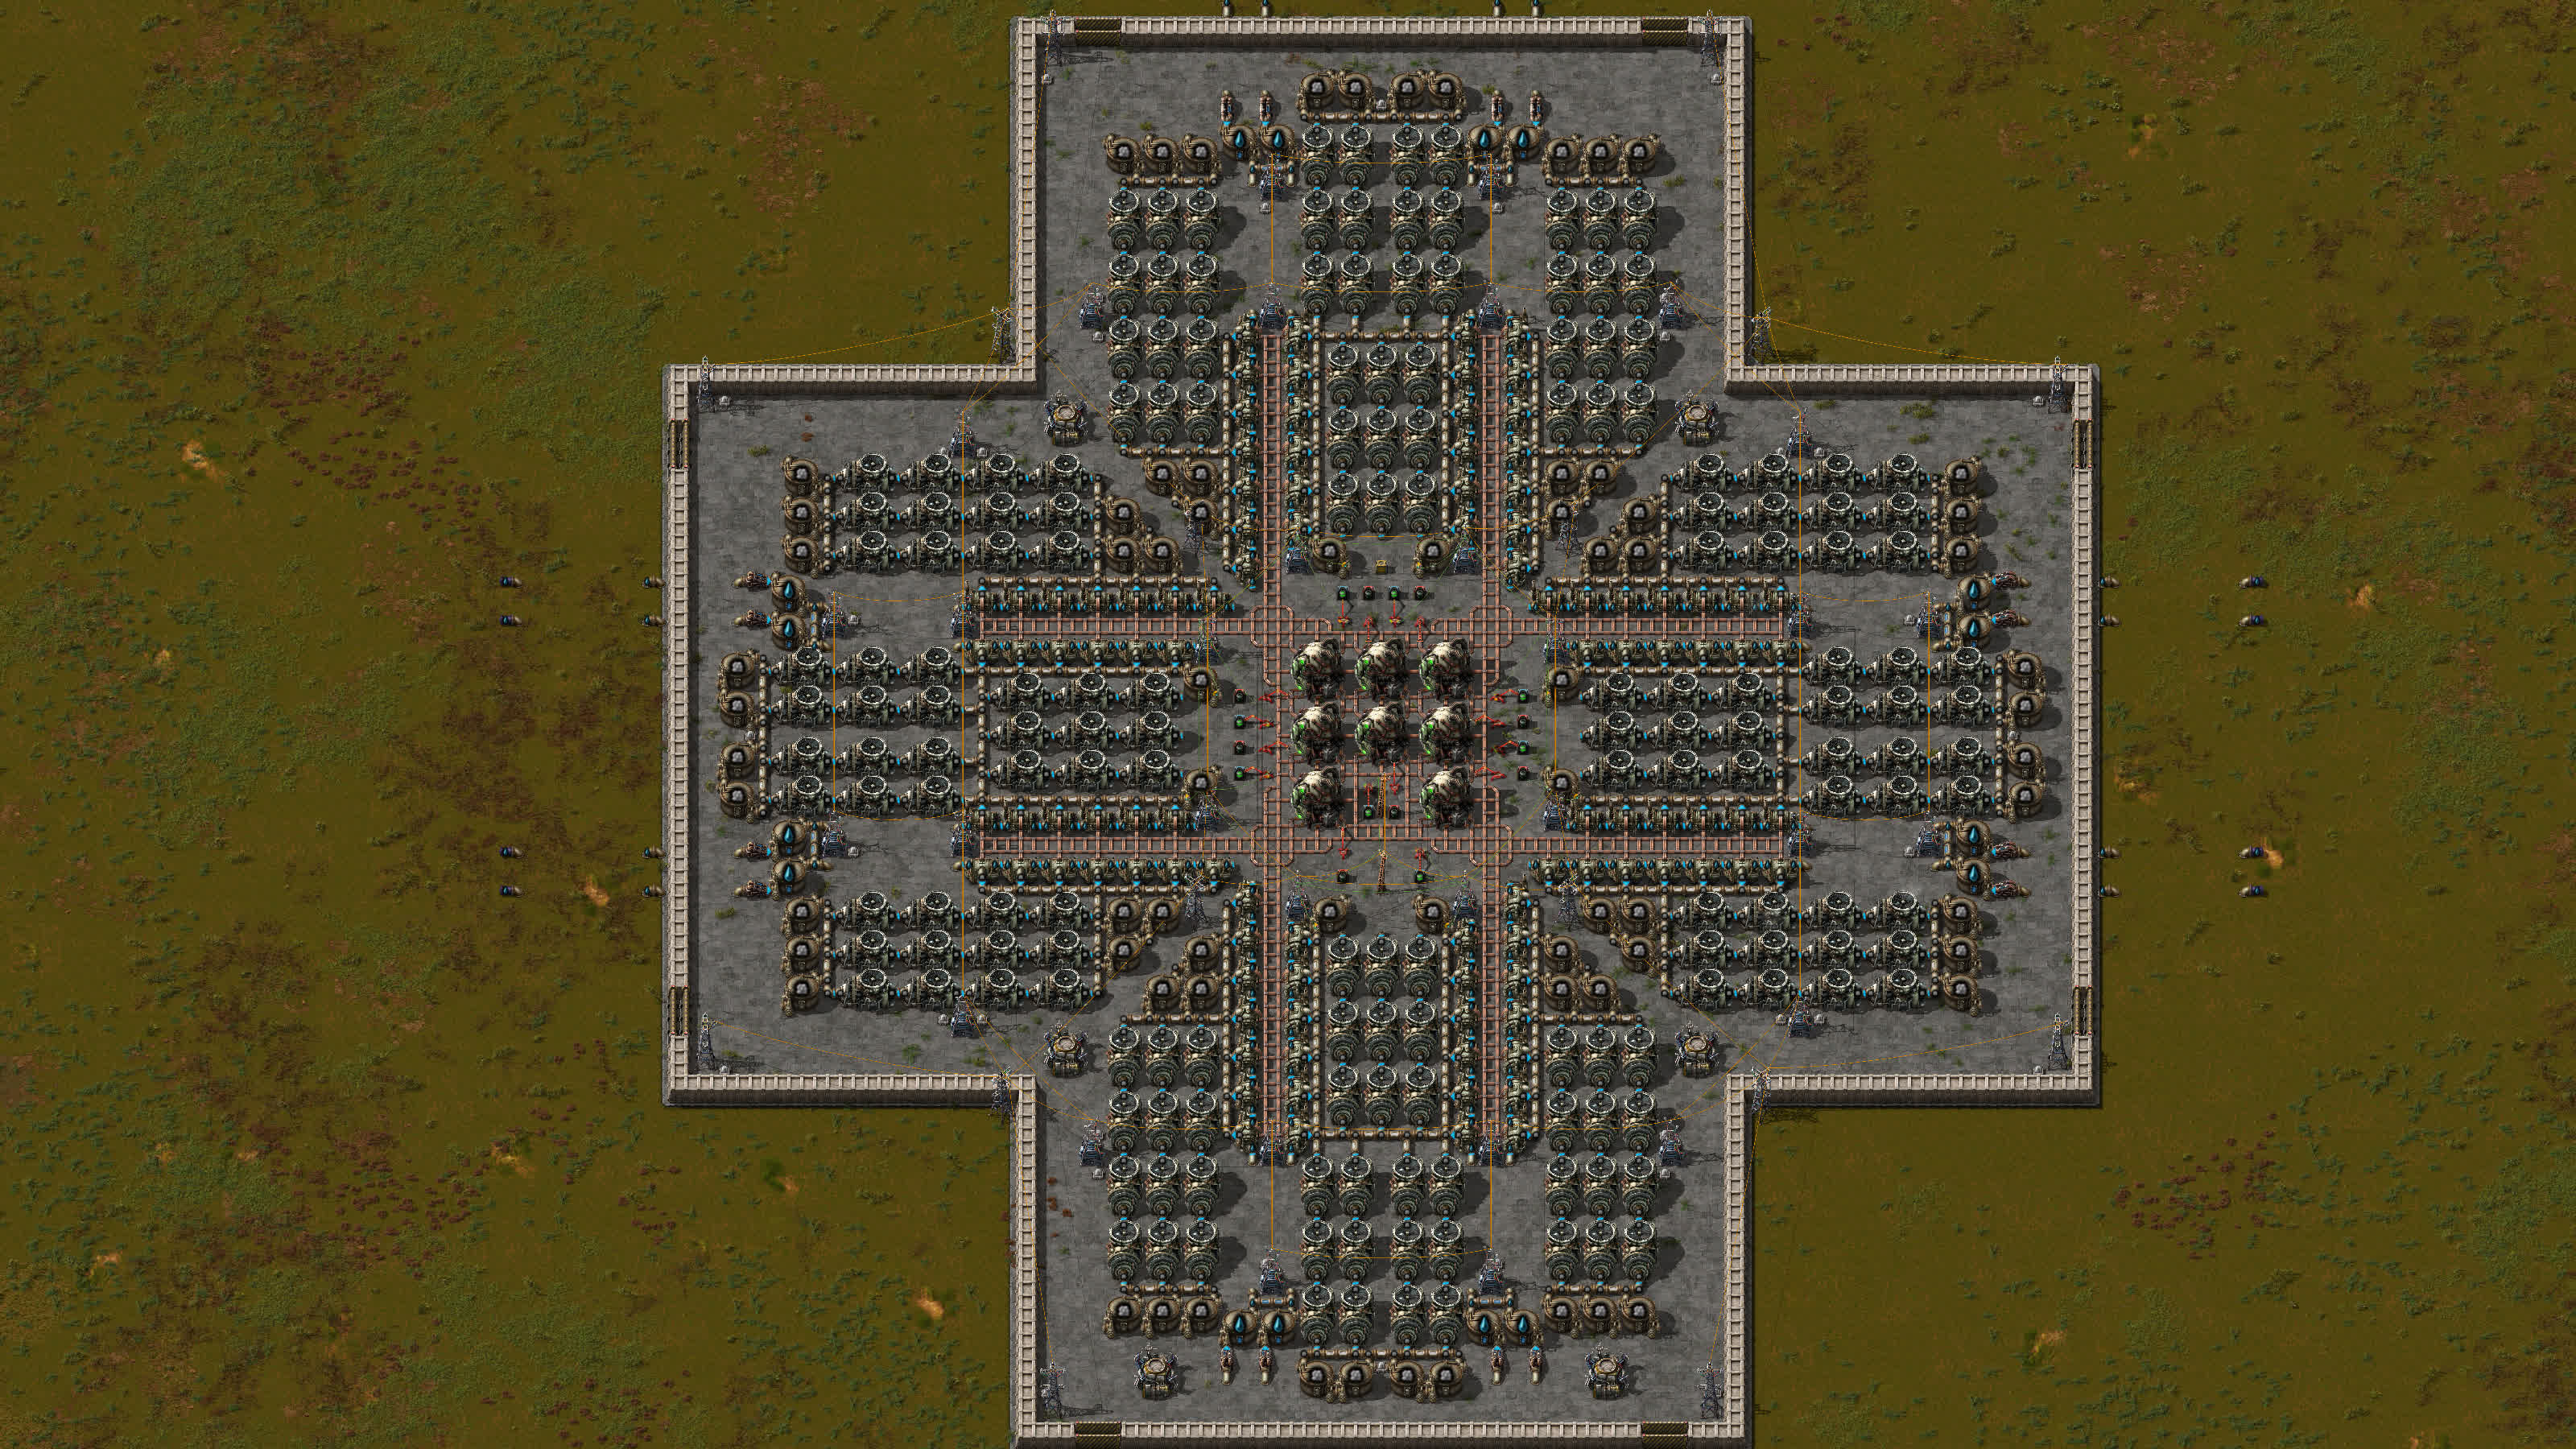 8 reactors in a 3x3 grid.